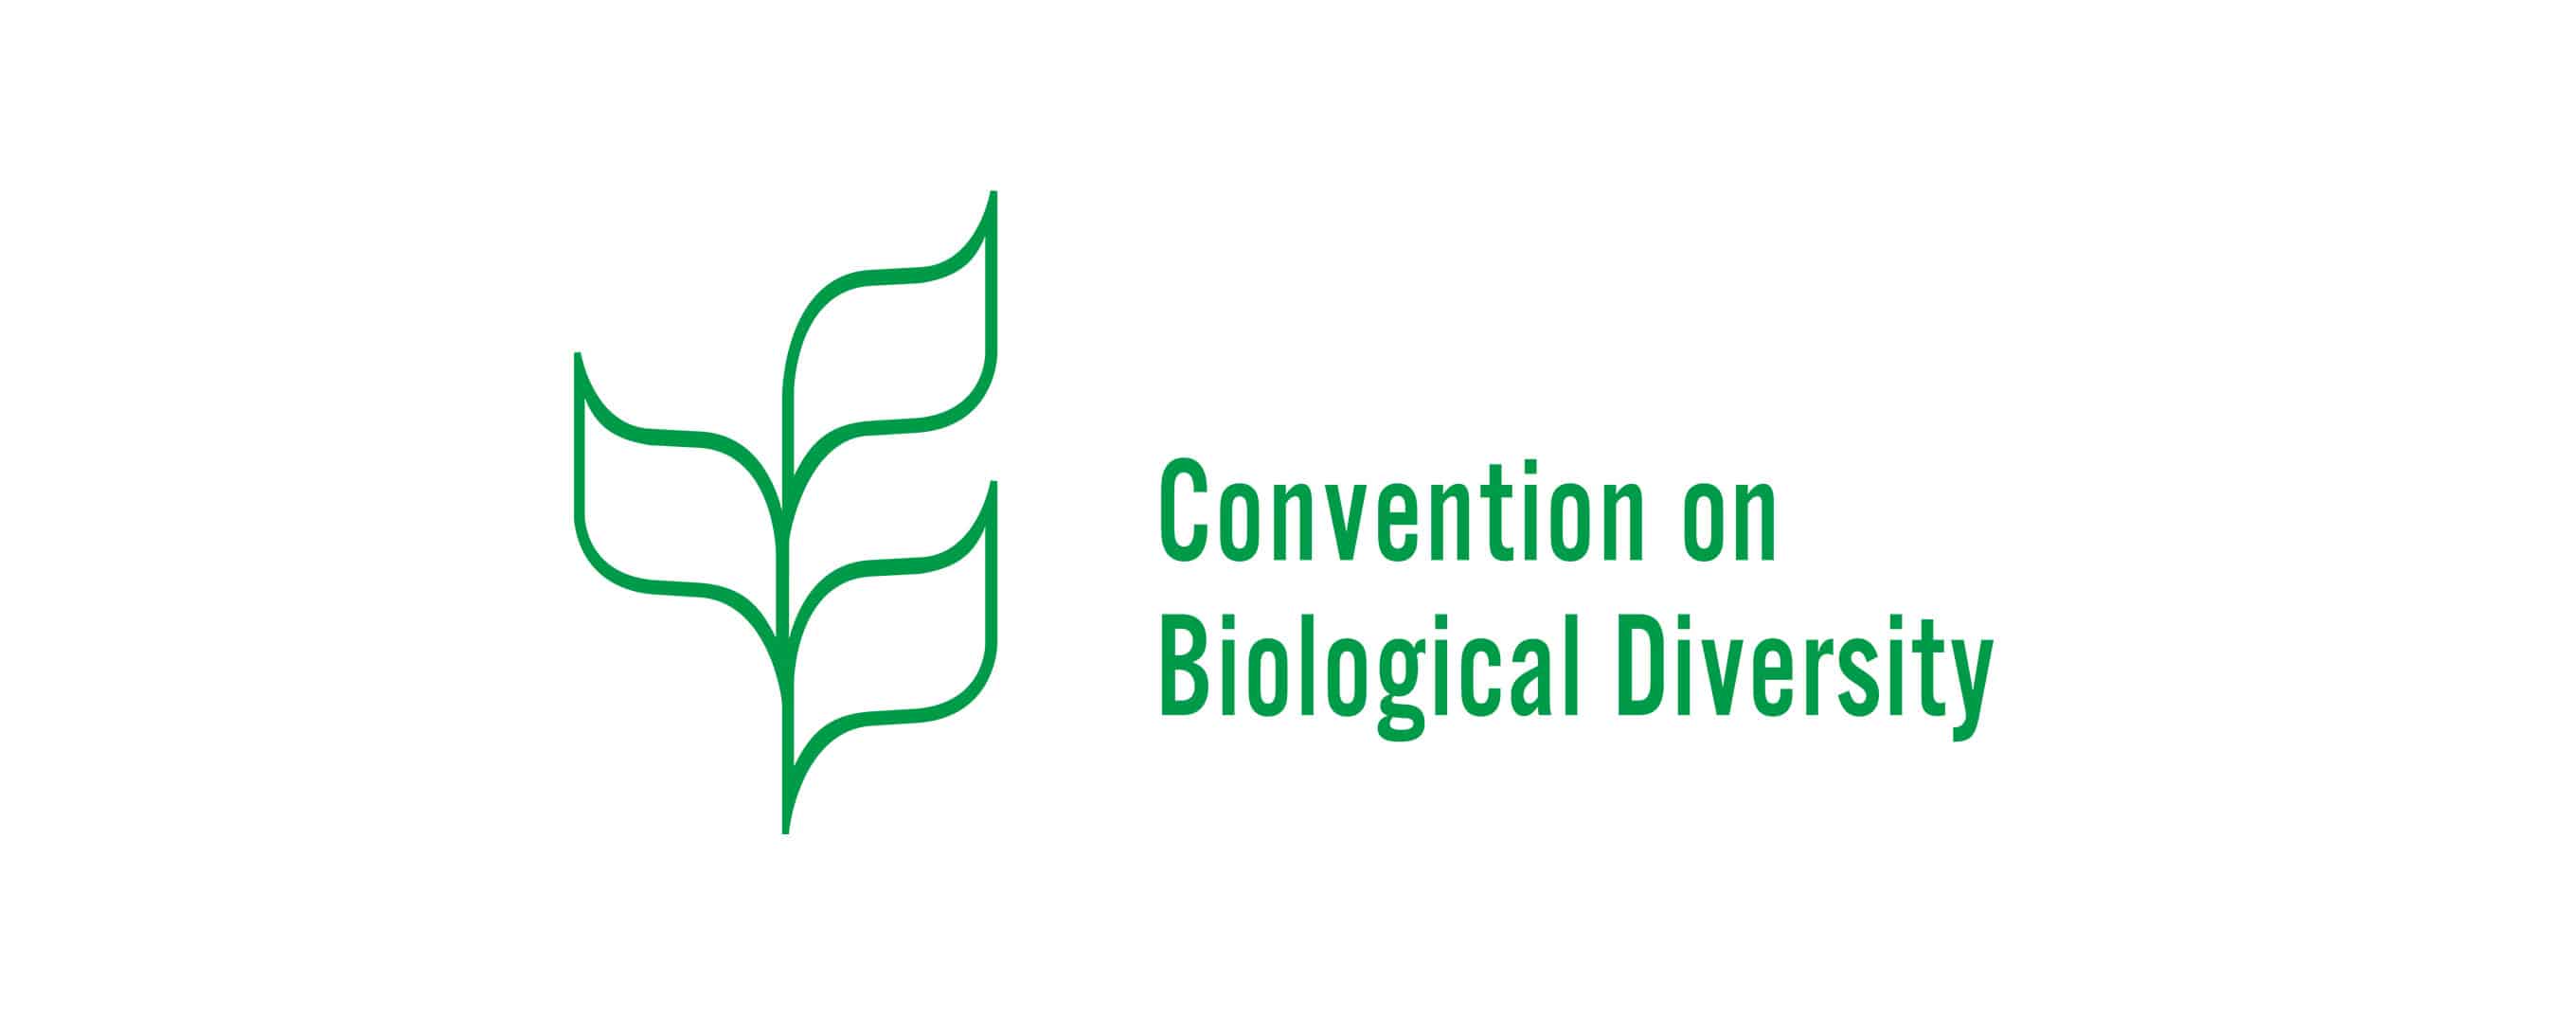 Convention on Biological Diversity logo